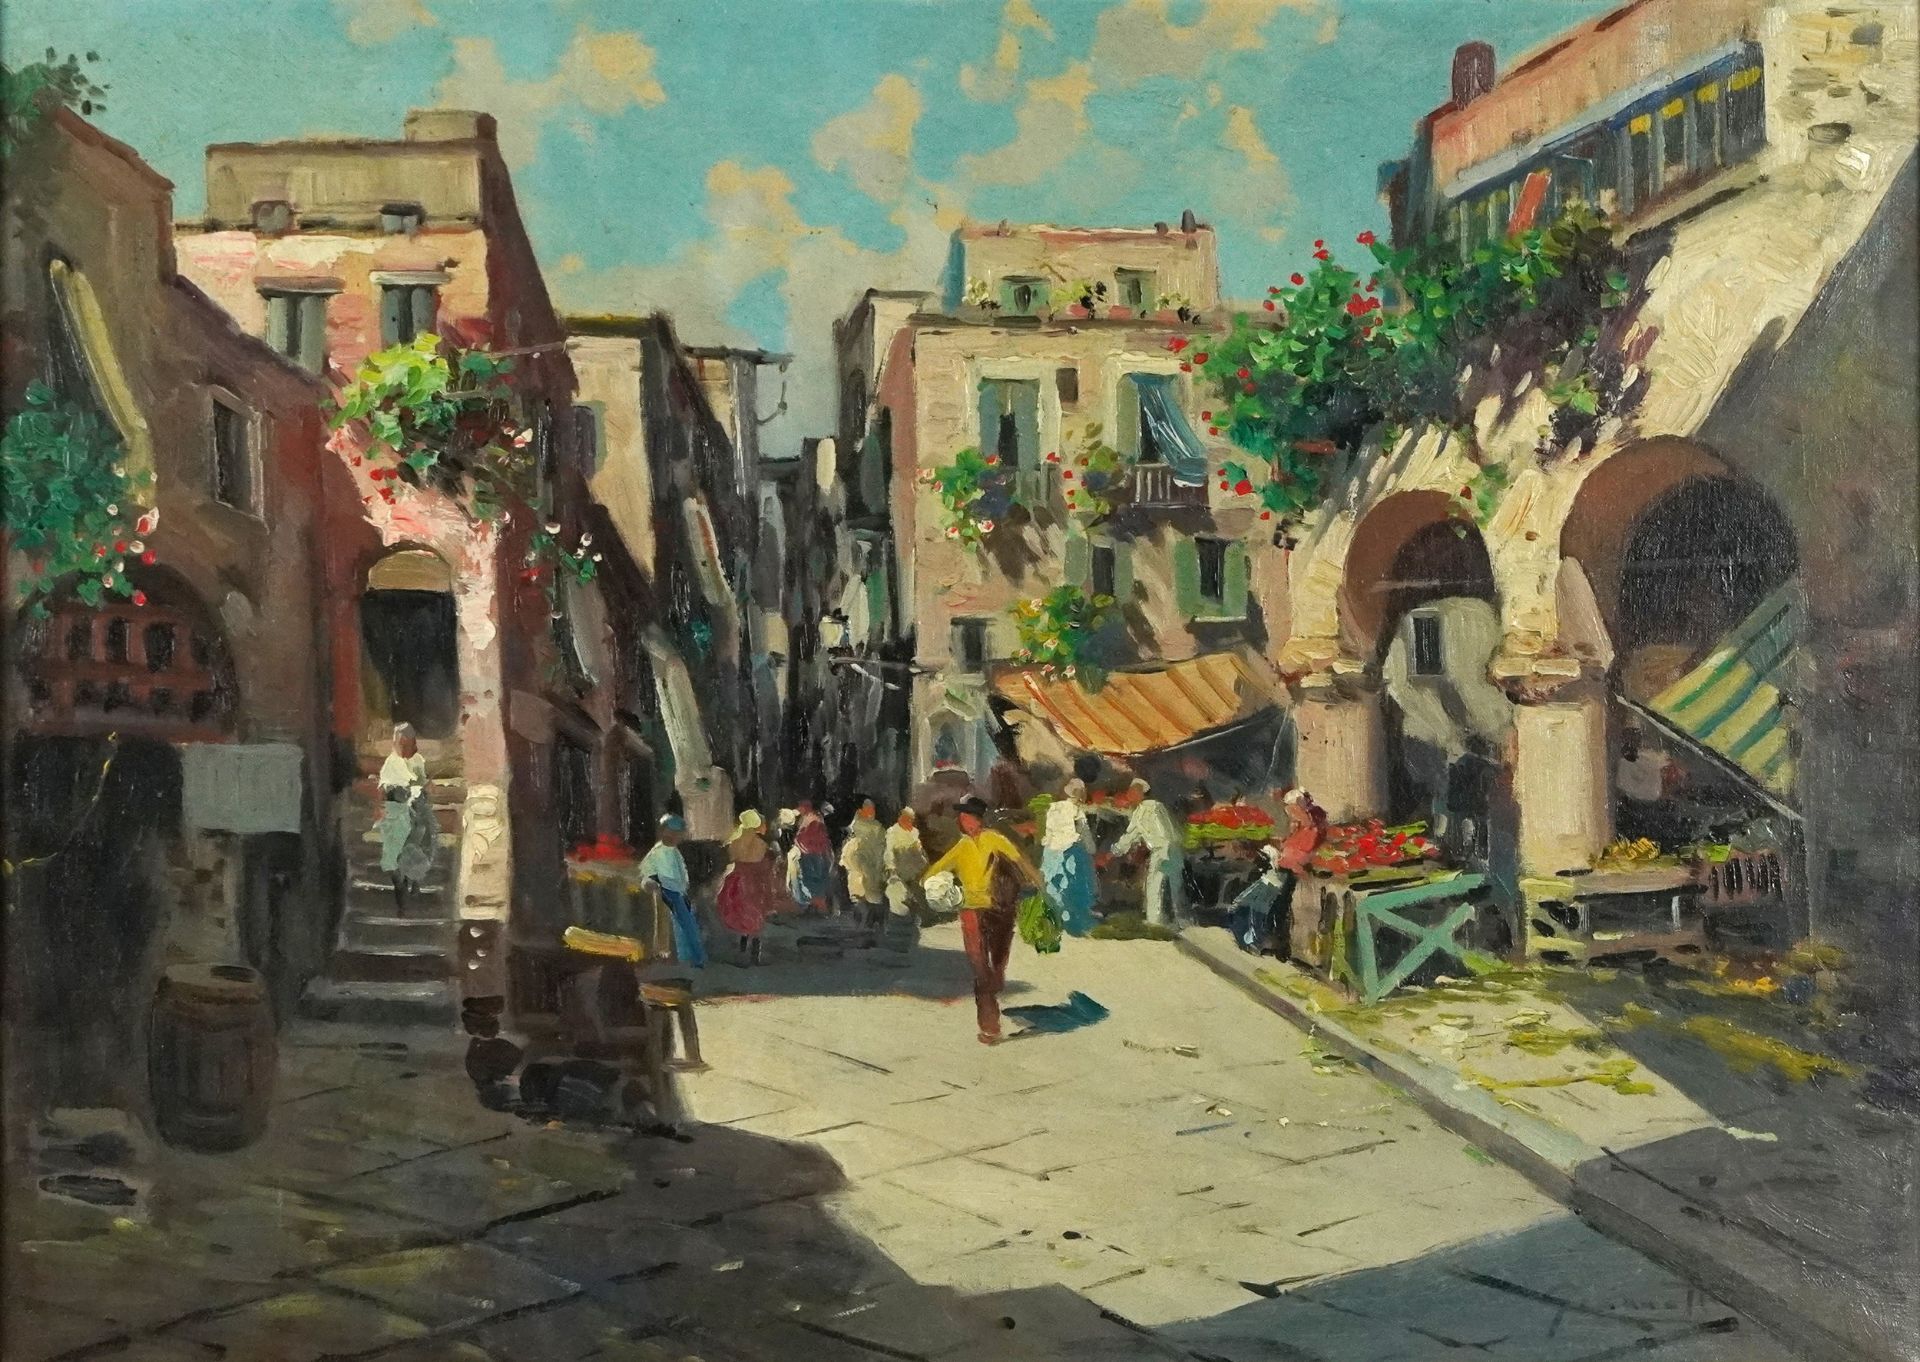 Eva Giannetti - Italian street scene, Impressionist oil on canvas, mounted and framed, 69.5cm x 49.